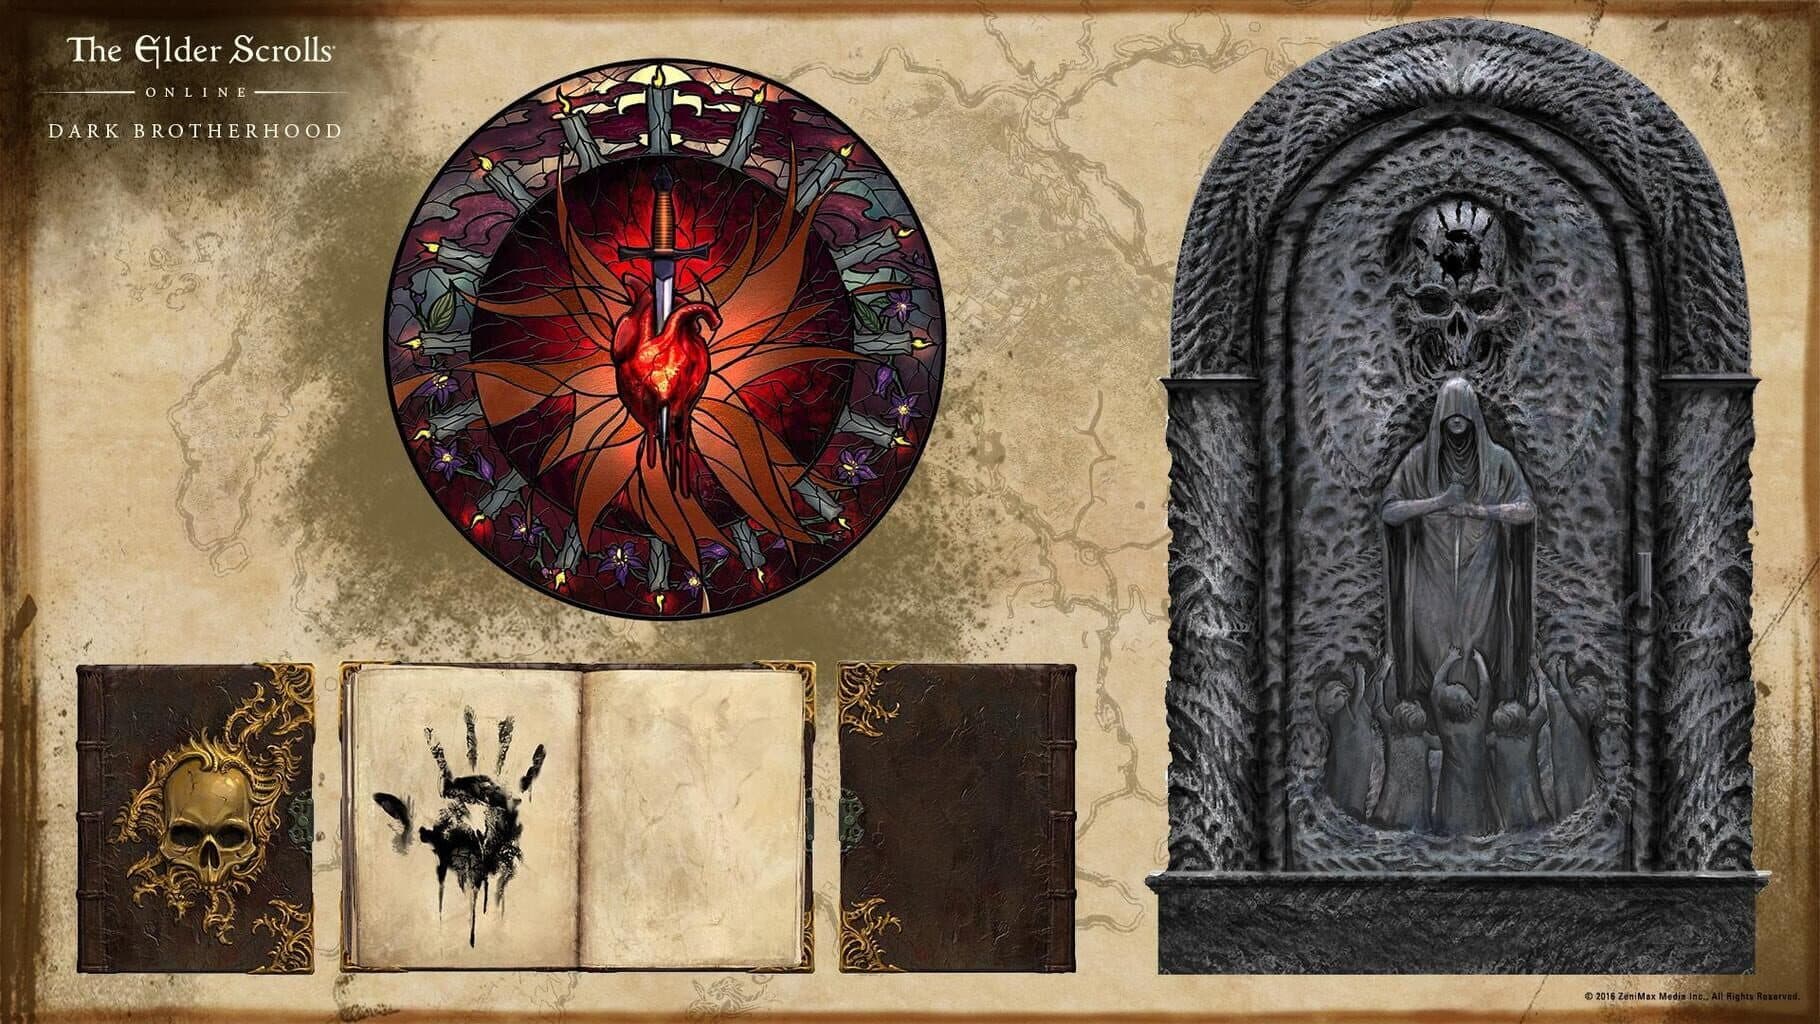 The Elder Scrolls Online: Dark Brotherhood Image